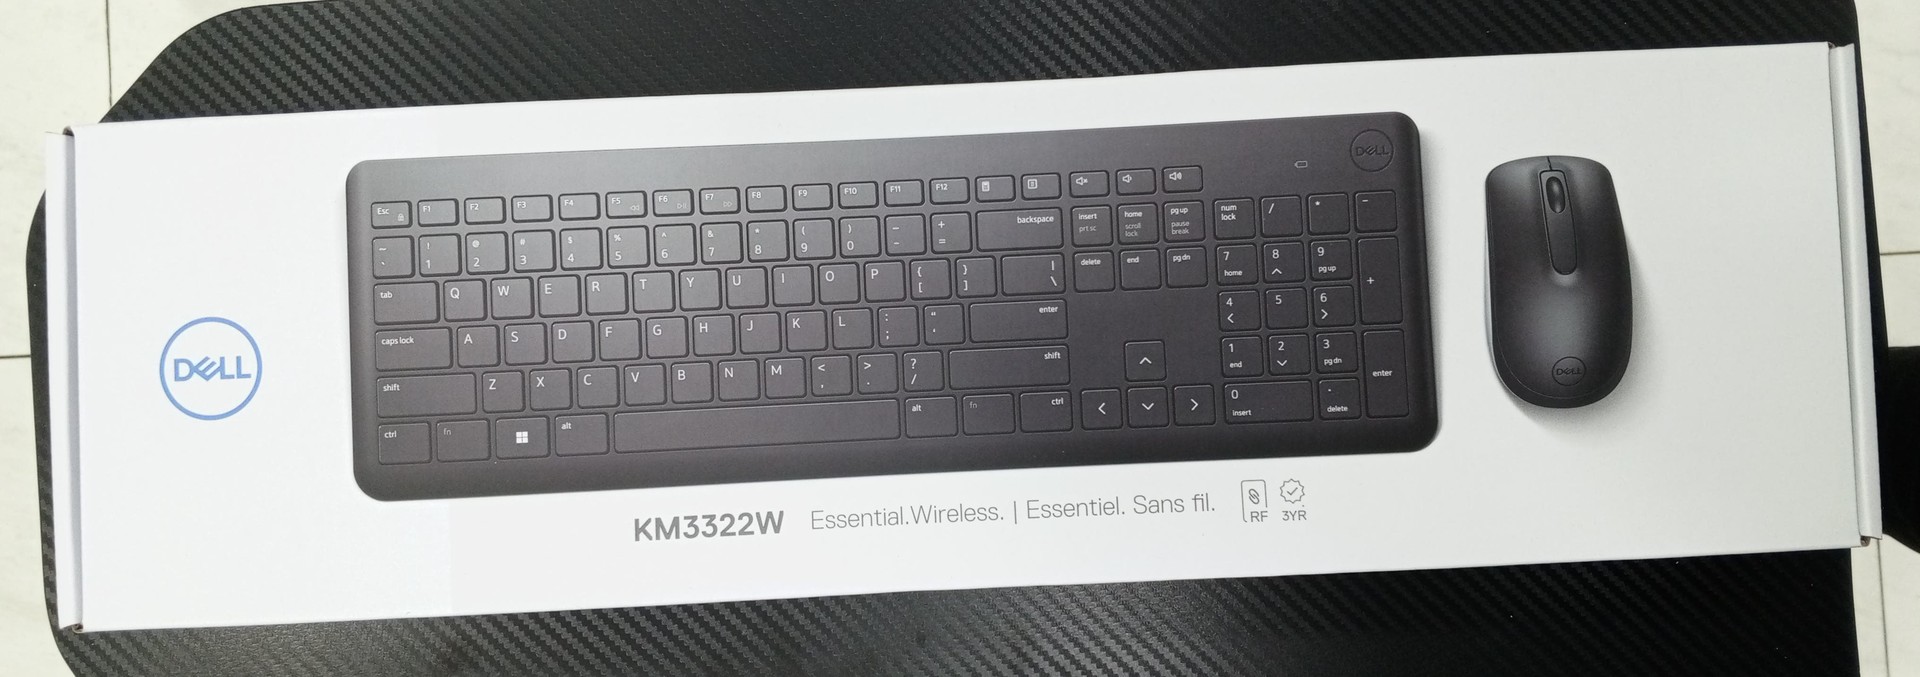 computadoras y laptops - Teclado Dell Wireless Keyboard and Mouse - KM3322W
